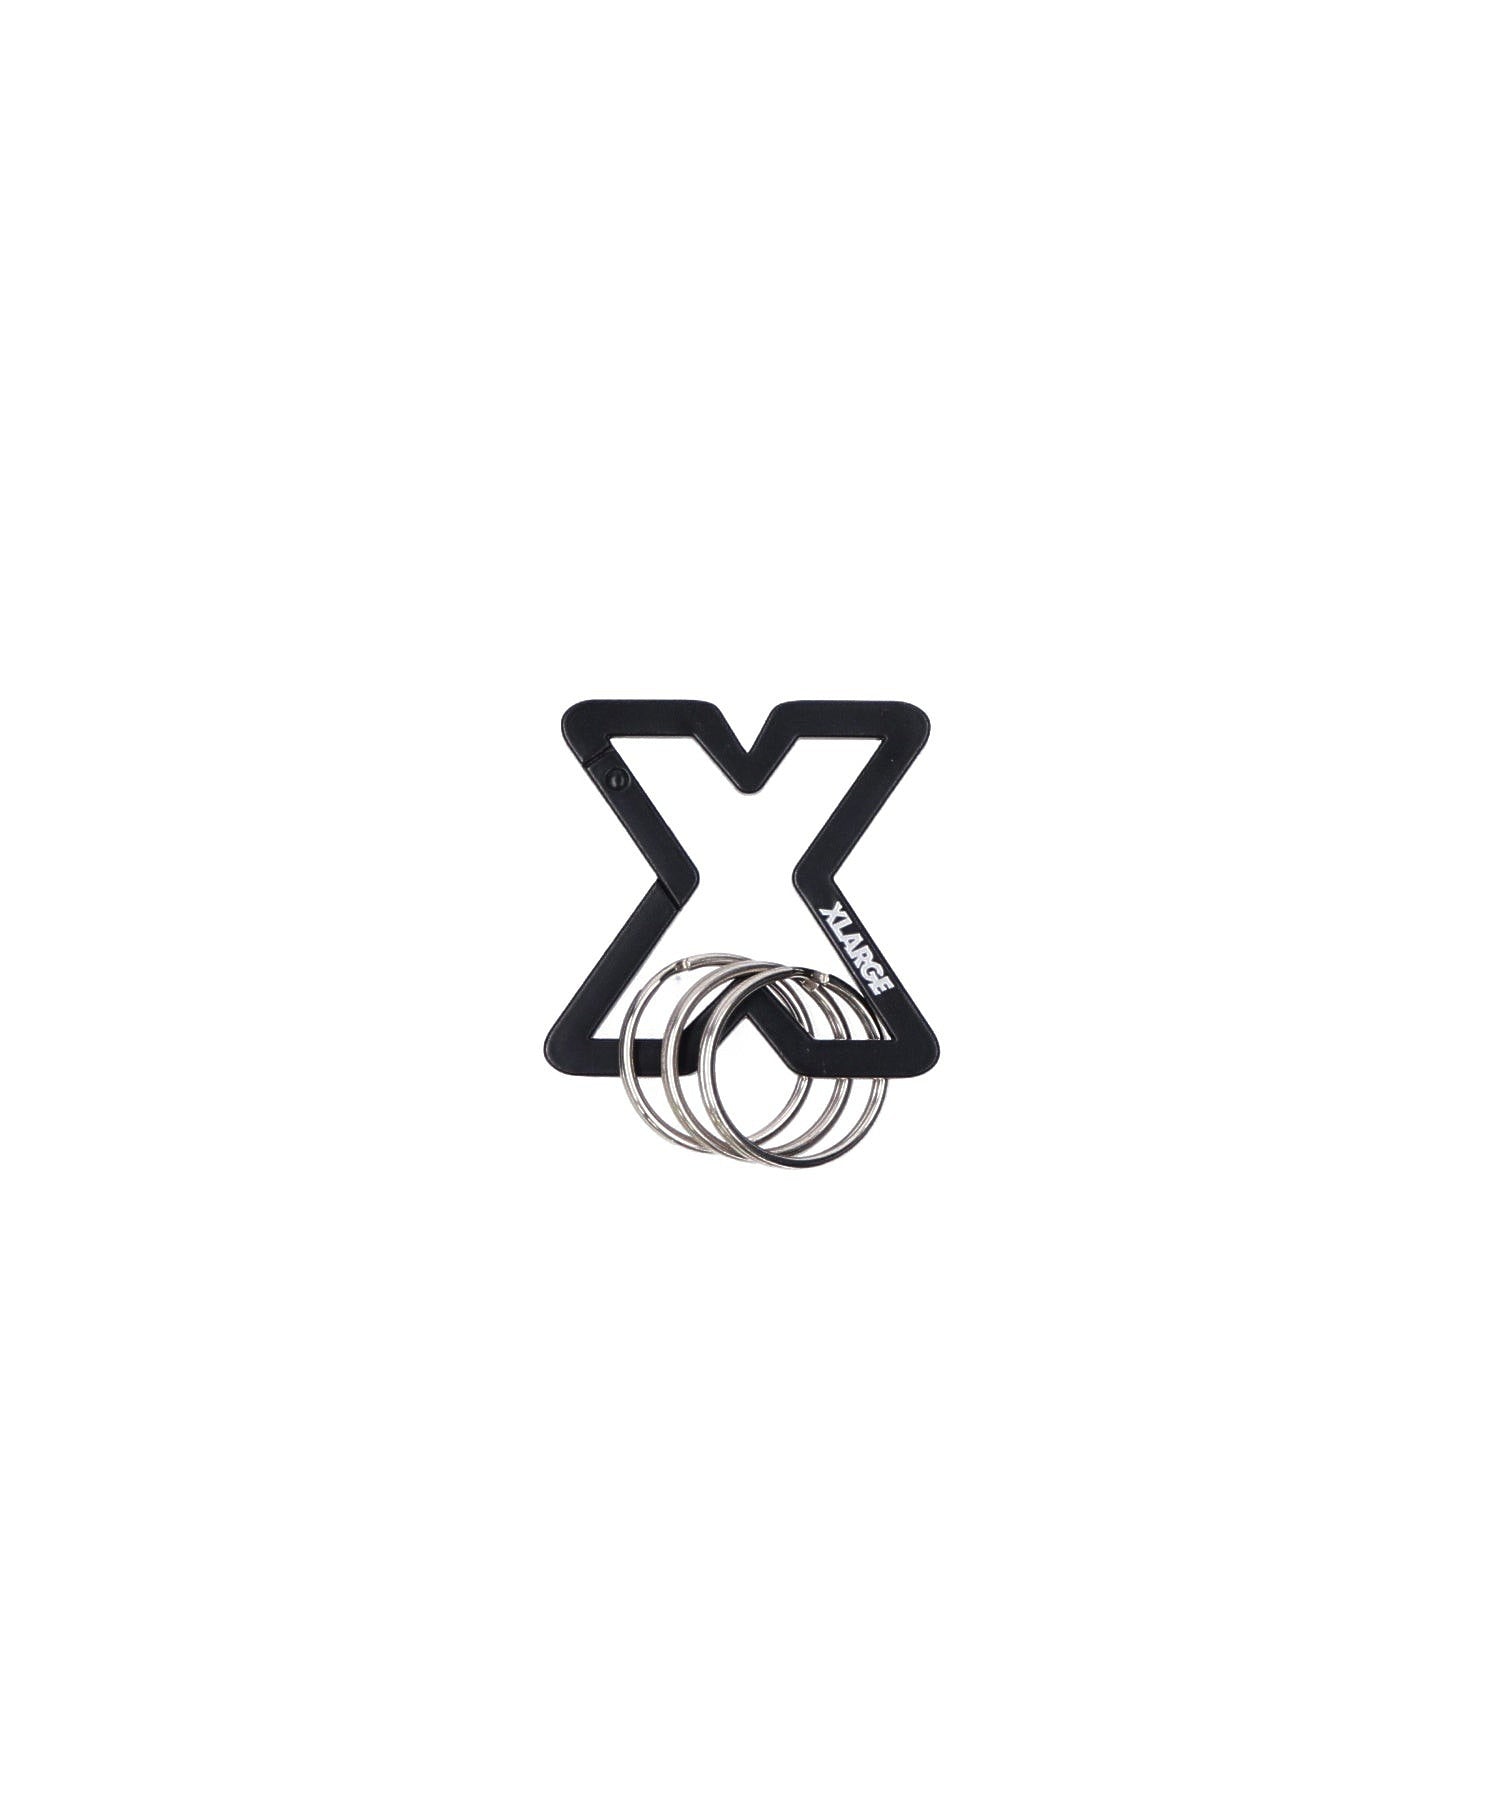 X-SHAPED CARABINER XLARGE